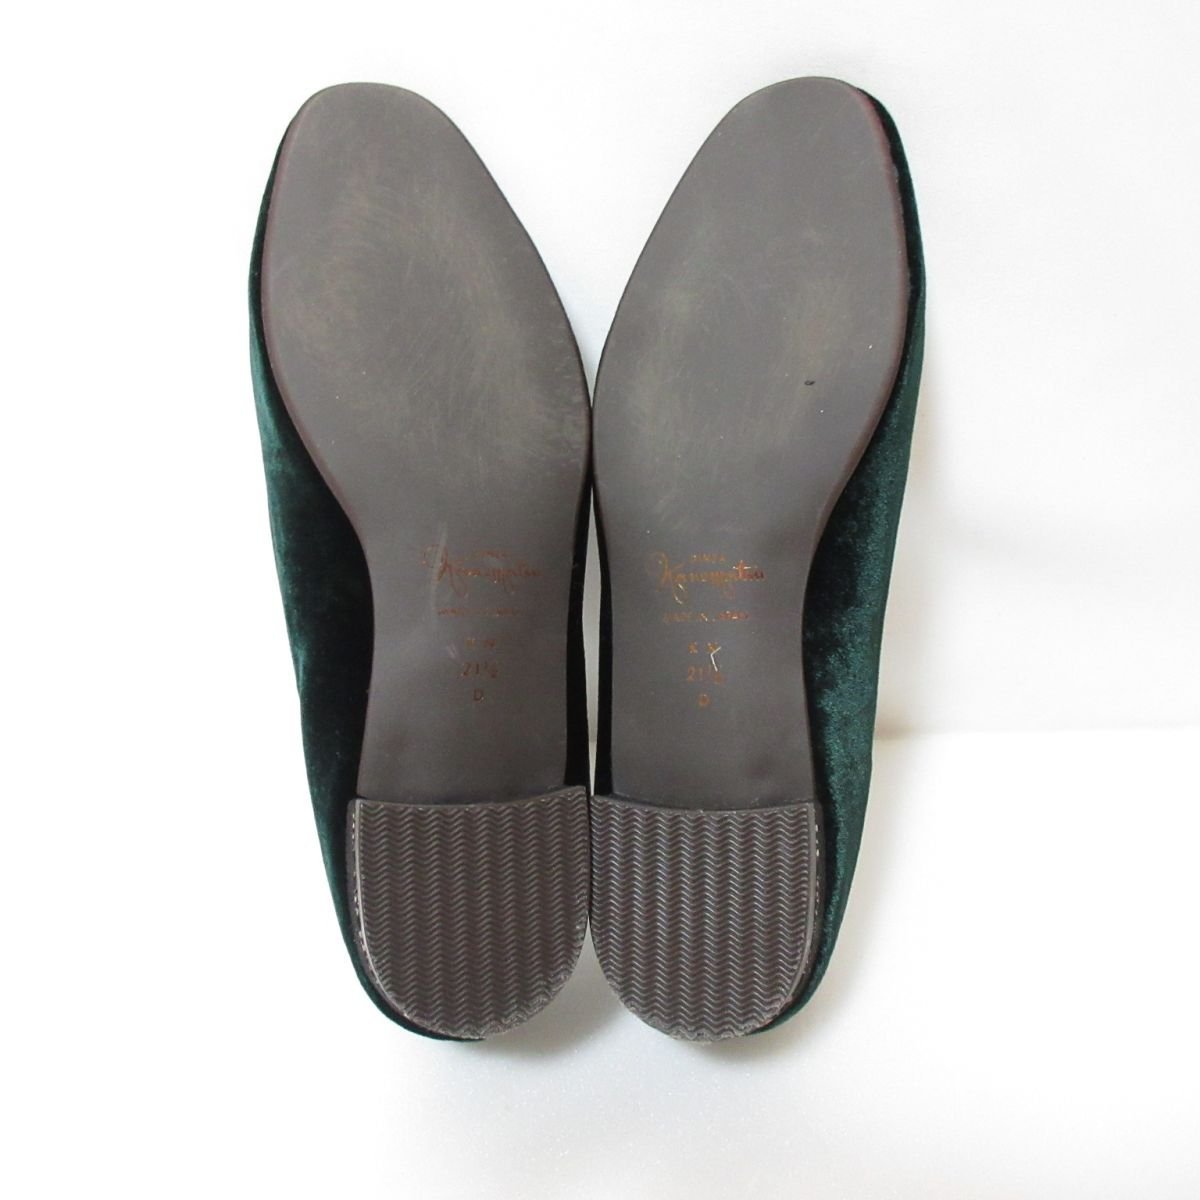  as good as new GINZA Kanematsu Ginza Kanematsu Star star pattern opera shoes flat shoes 21.5cm D green 122